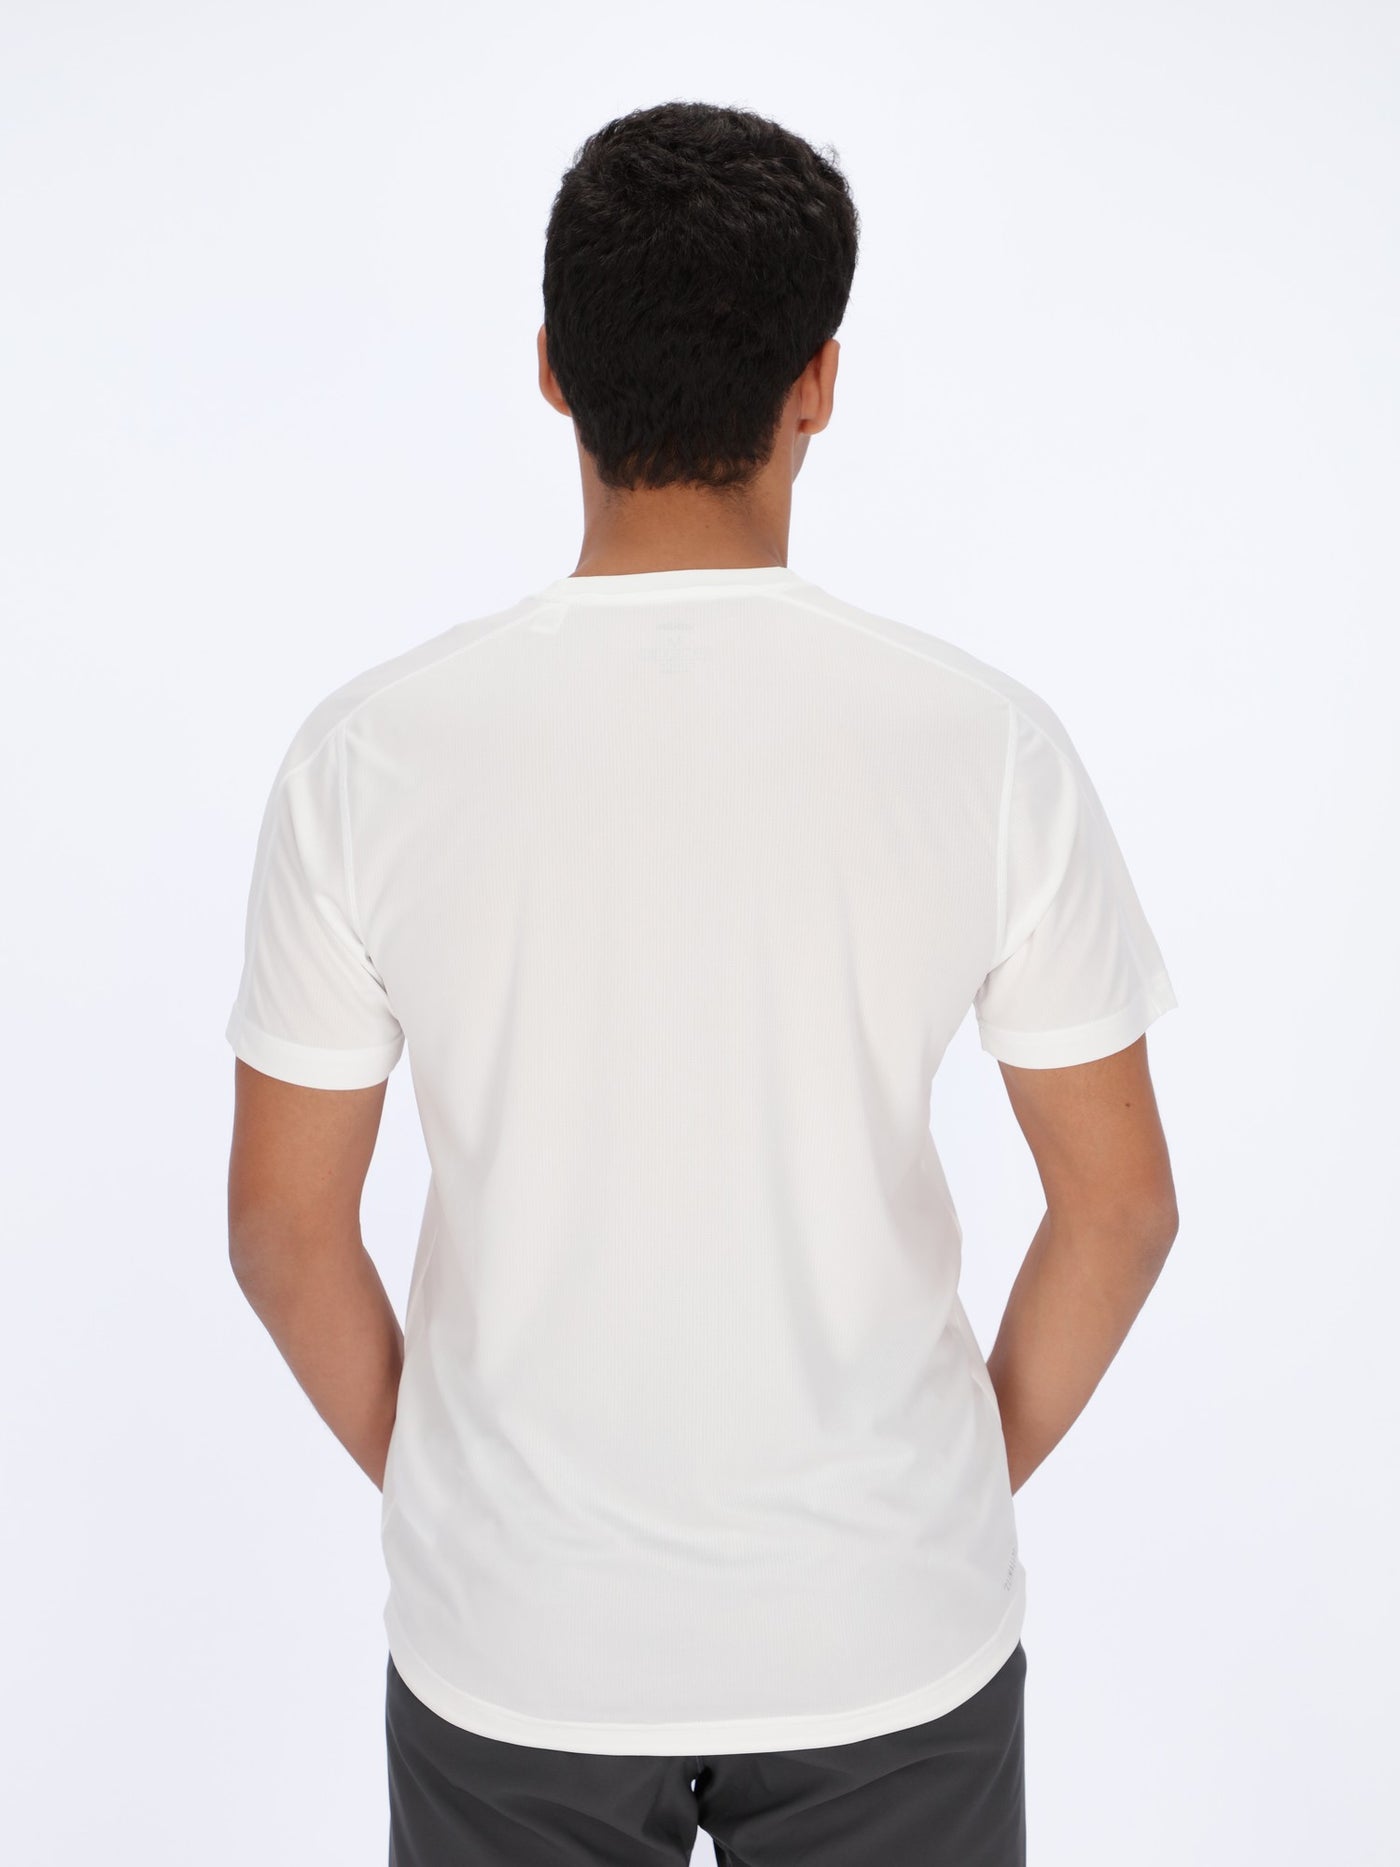 Men's T-shirt Design 2 Move Tee - DT8694